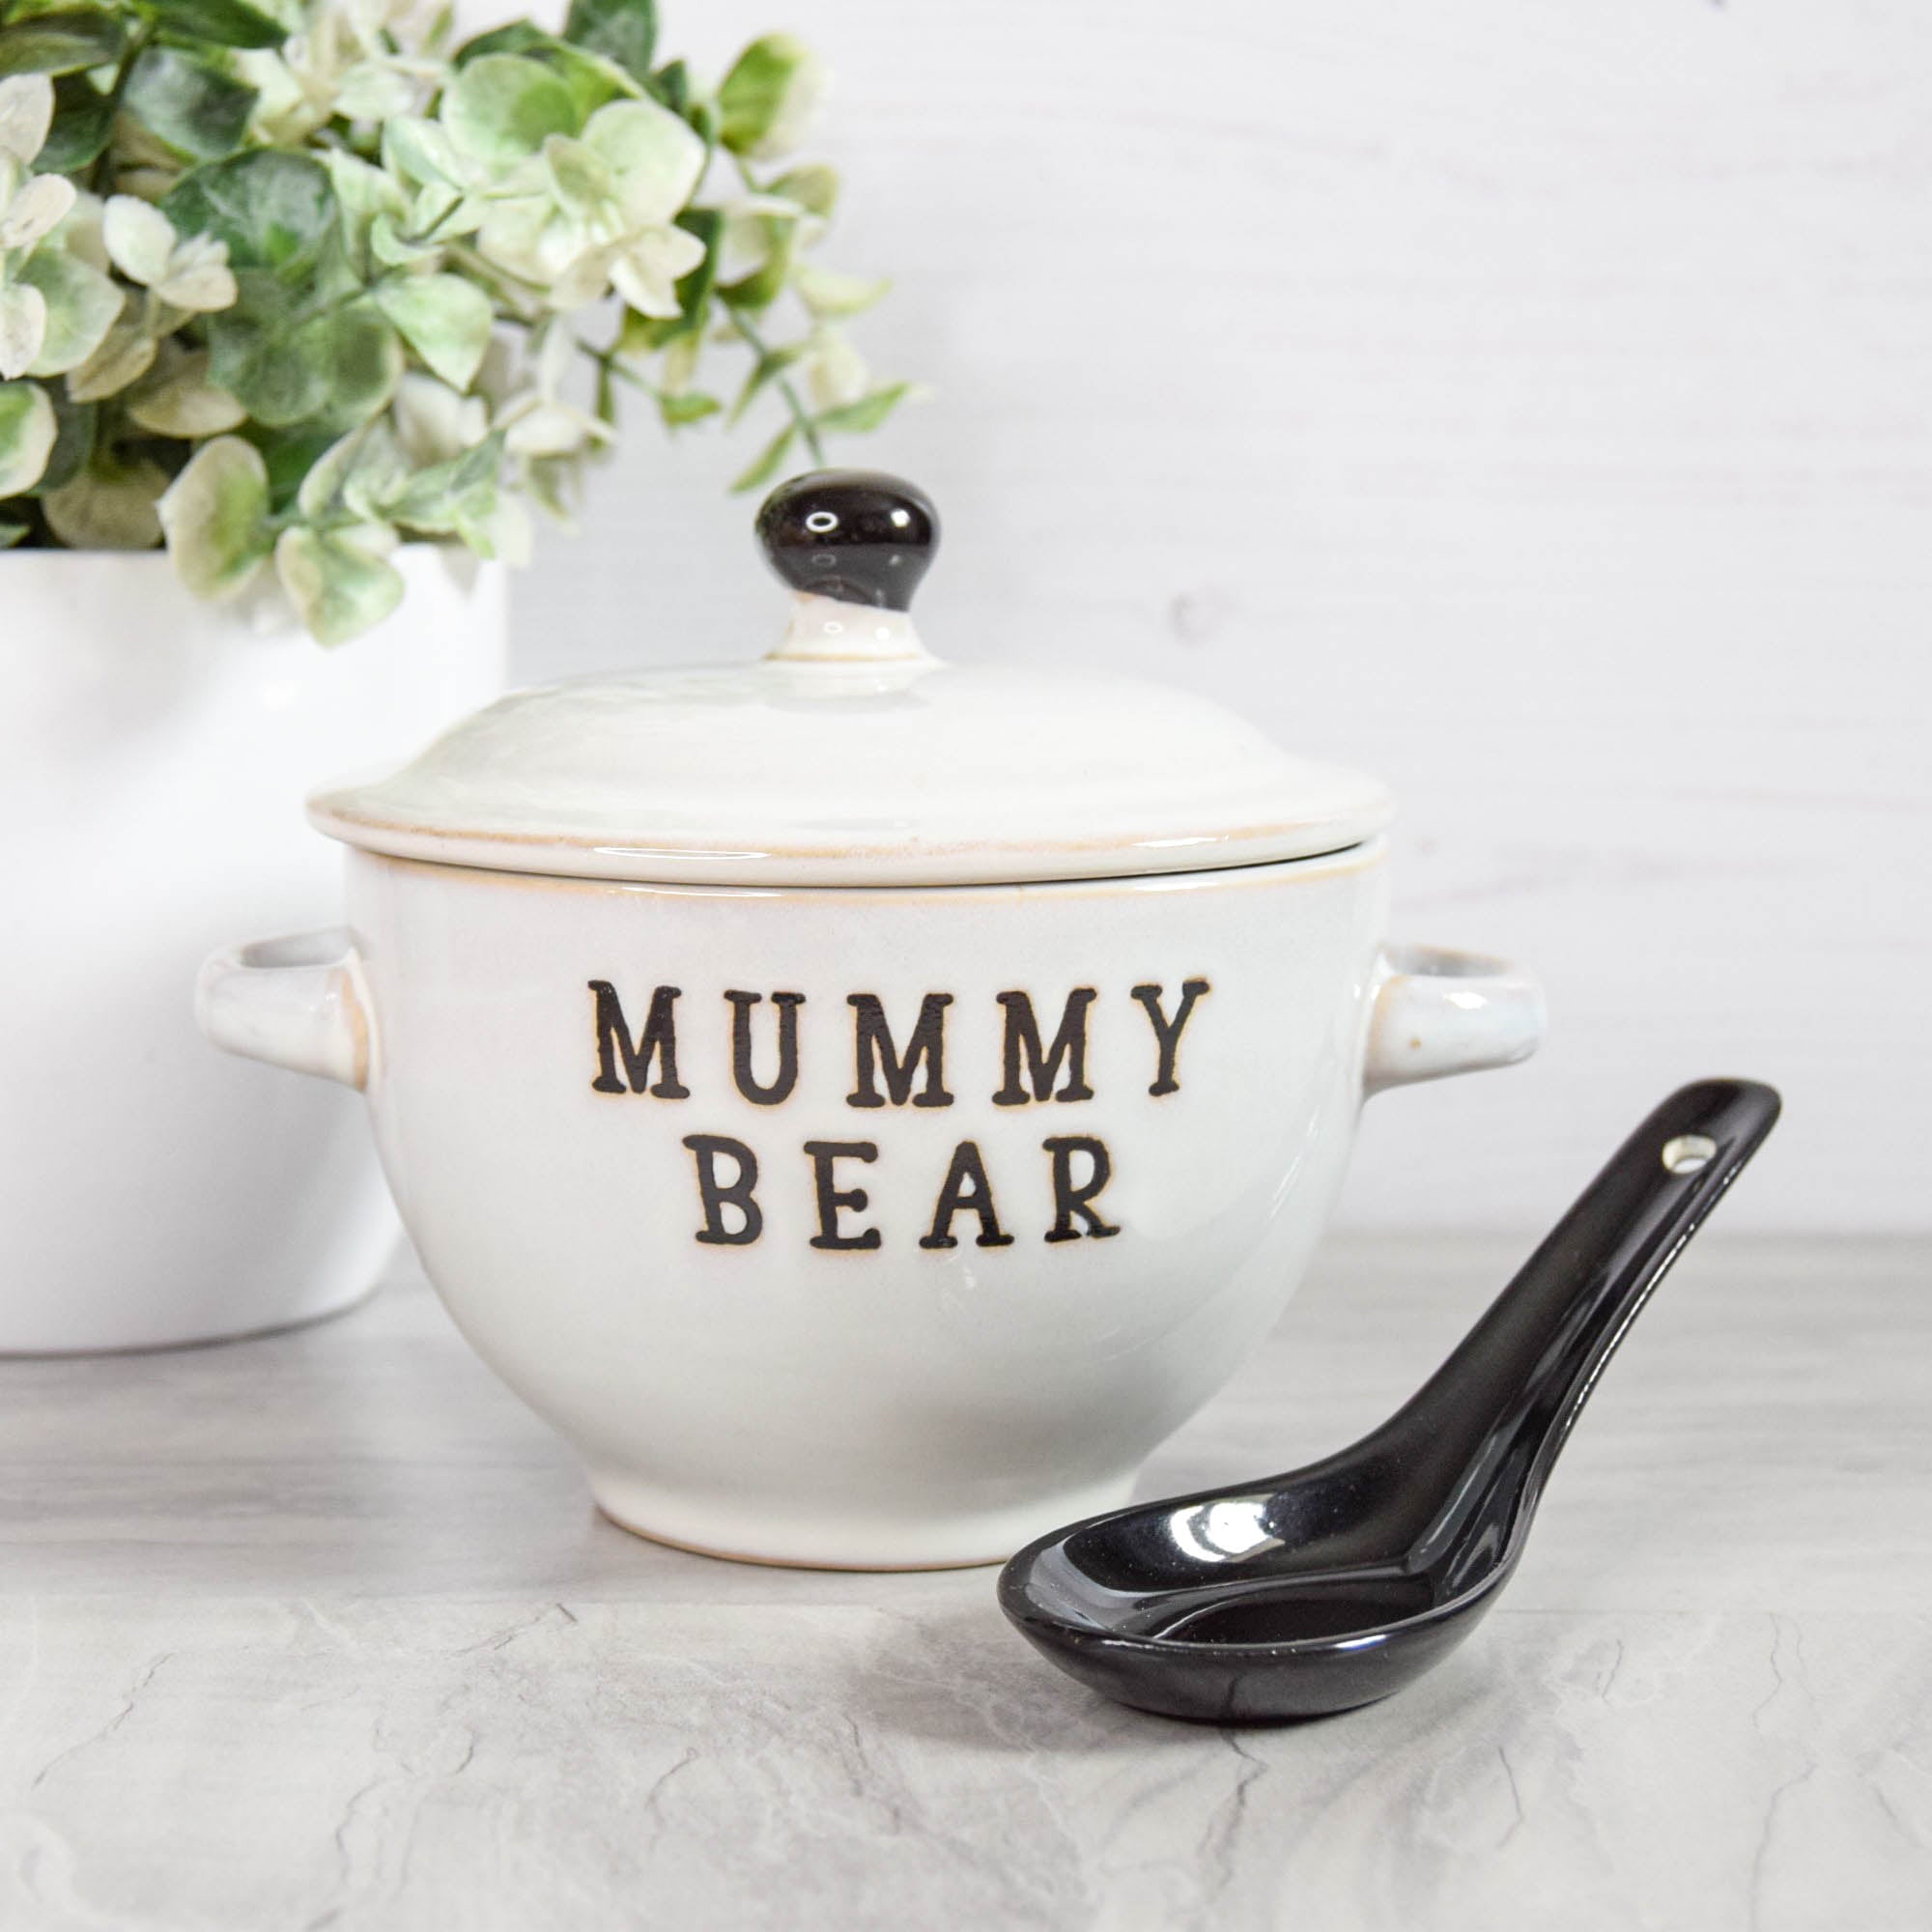 Mummy Bear Bowl and Spoon